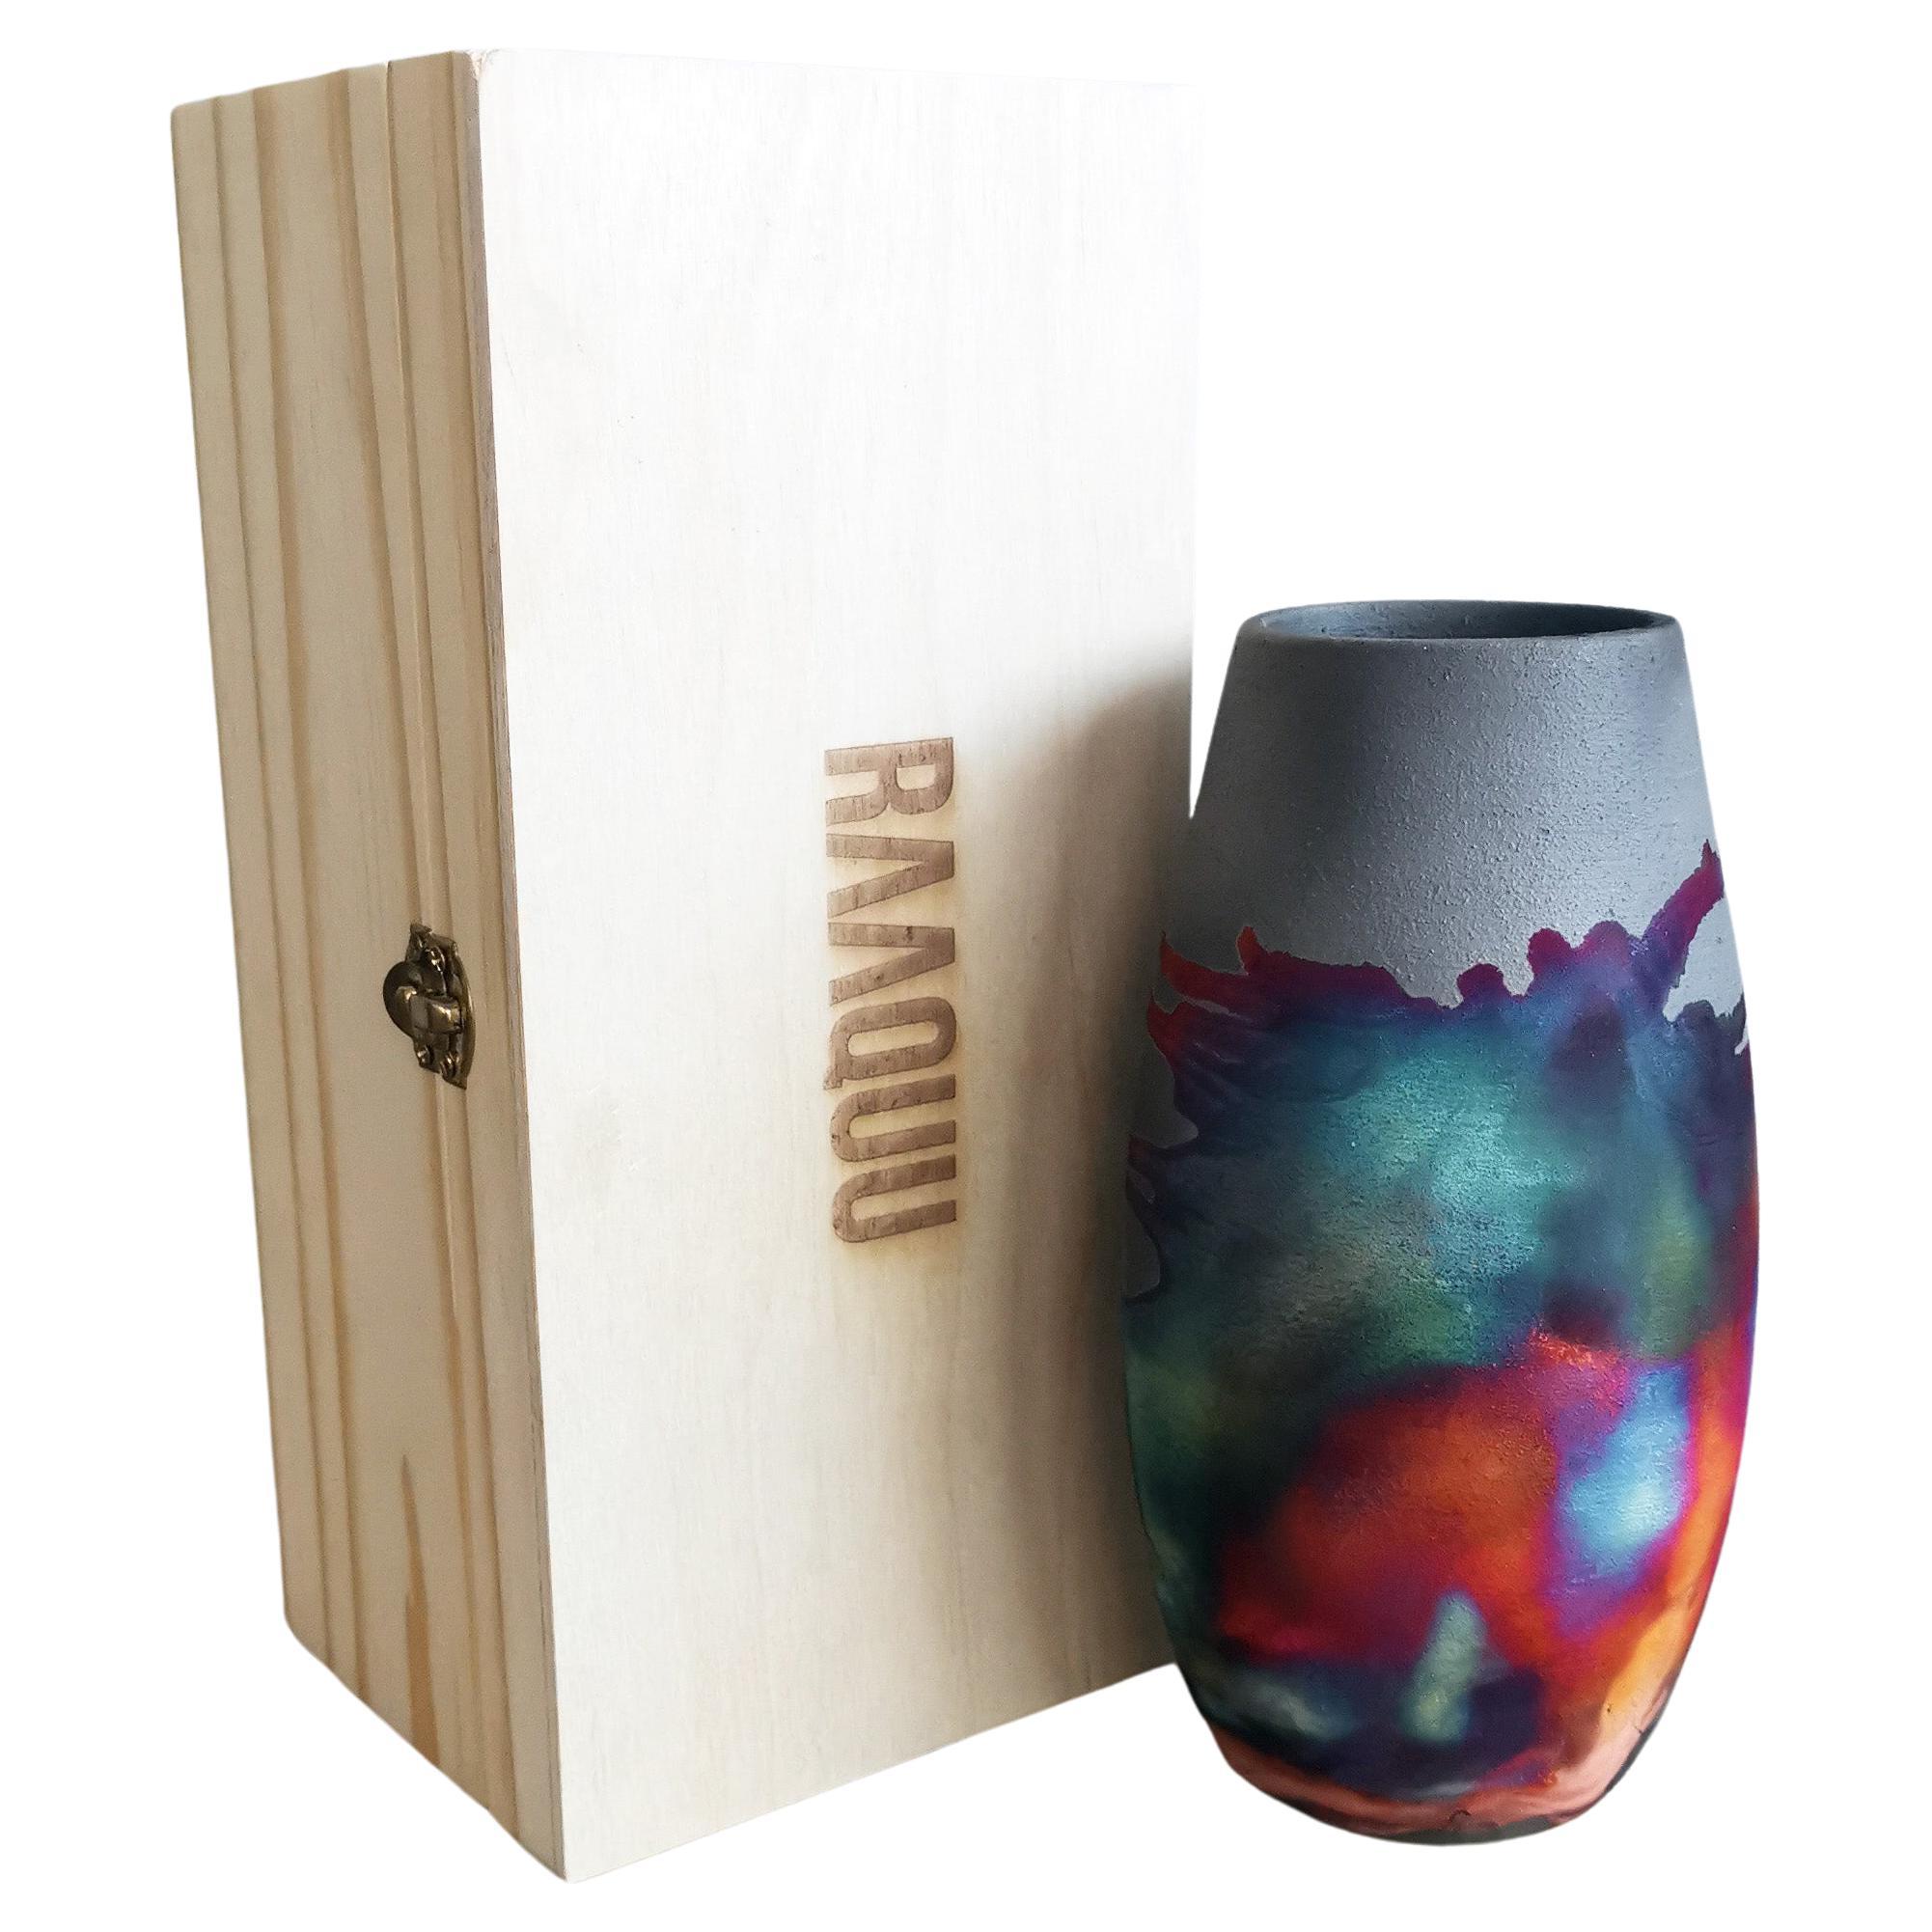 Tsuri Raku Pottery Vase with Gift Box - Carbon Copper - Handmade Ceramic